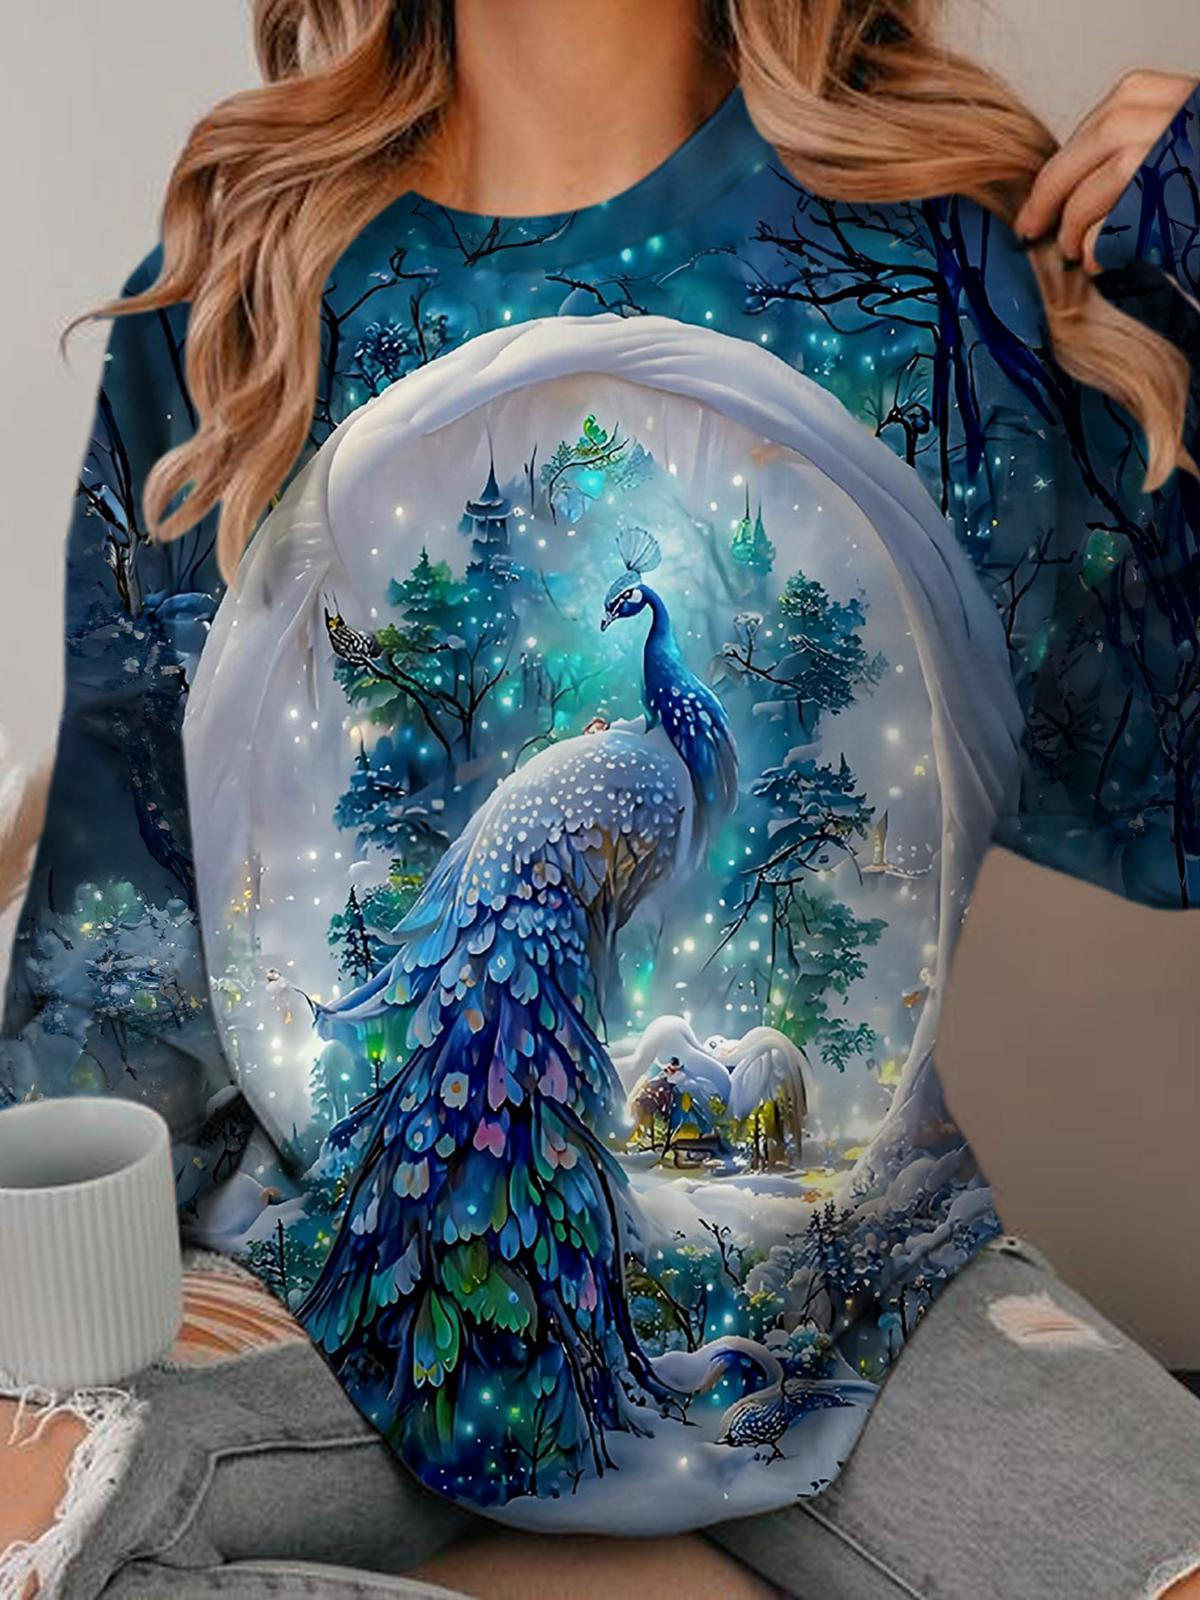 Snow Peacock Long Sleeve Top